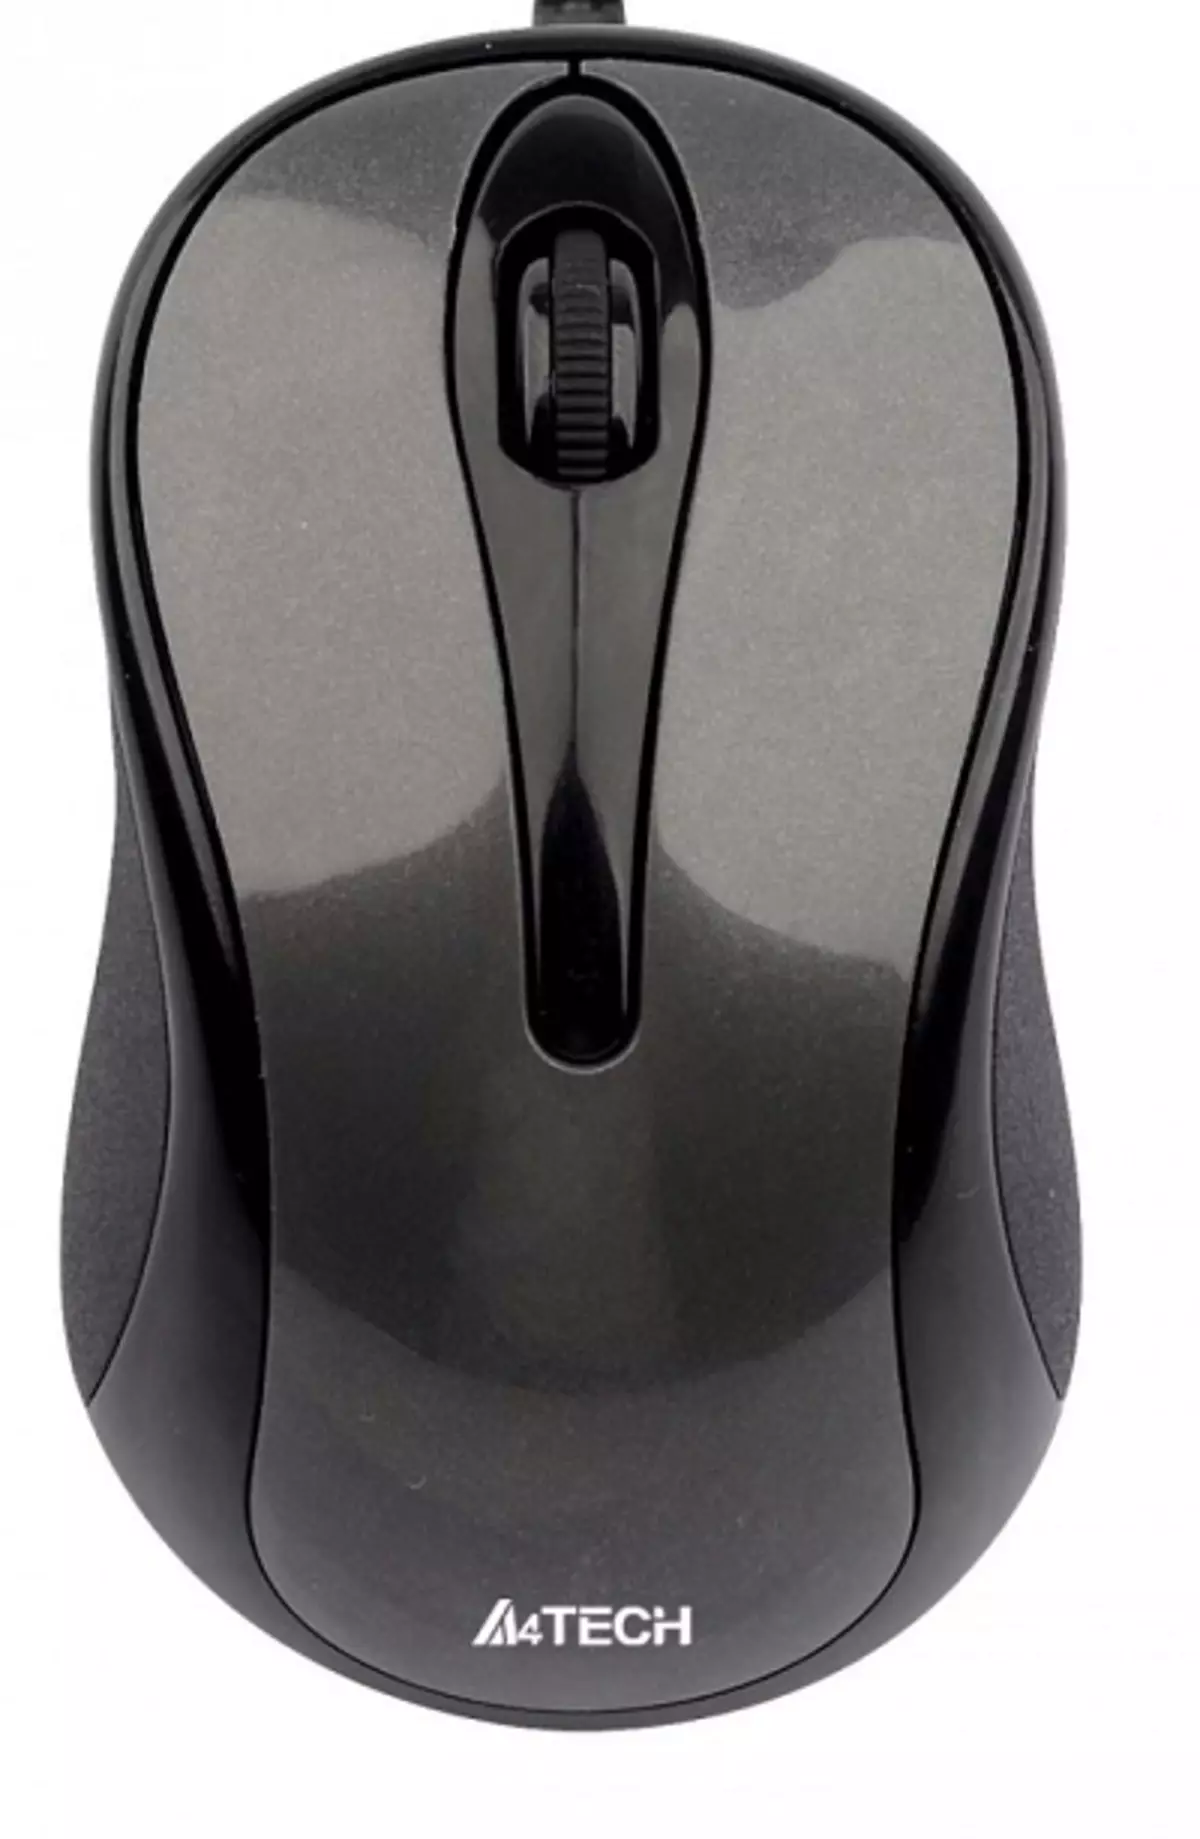 A4tech Mouse